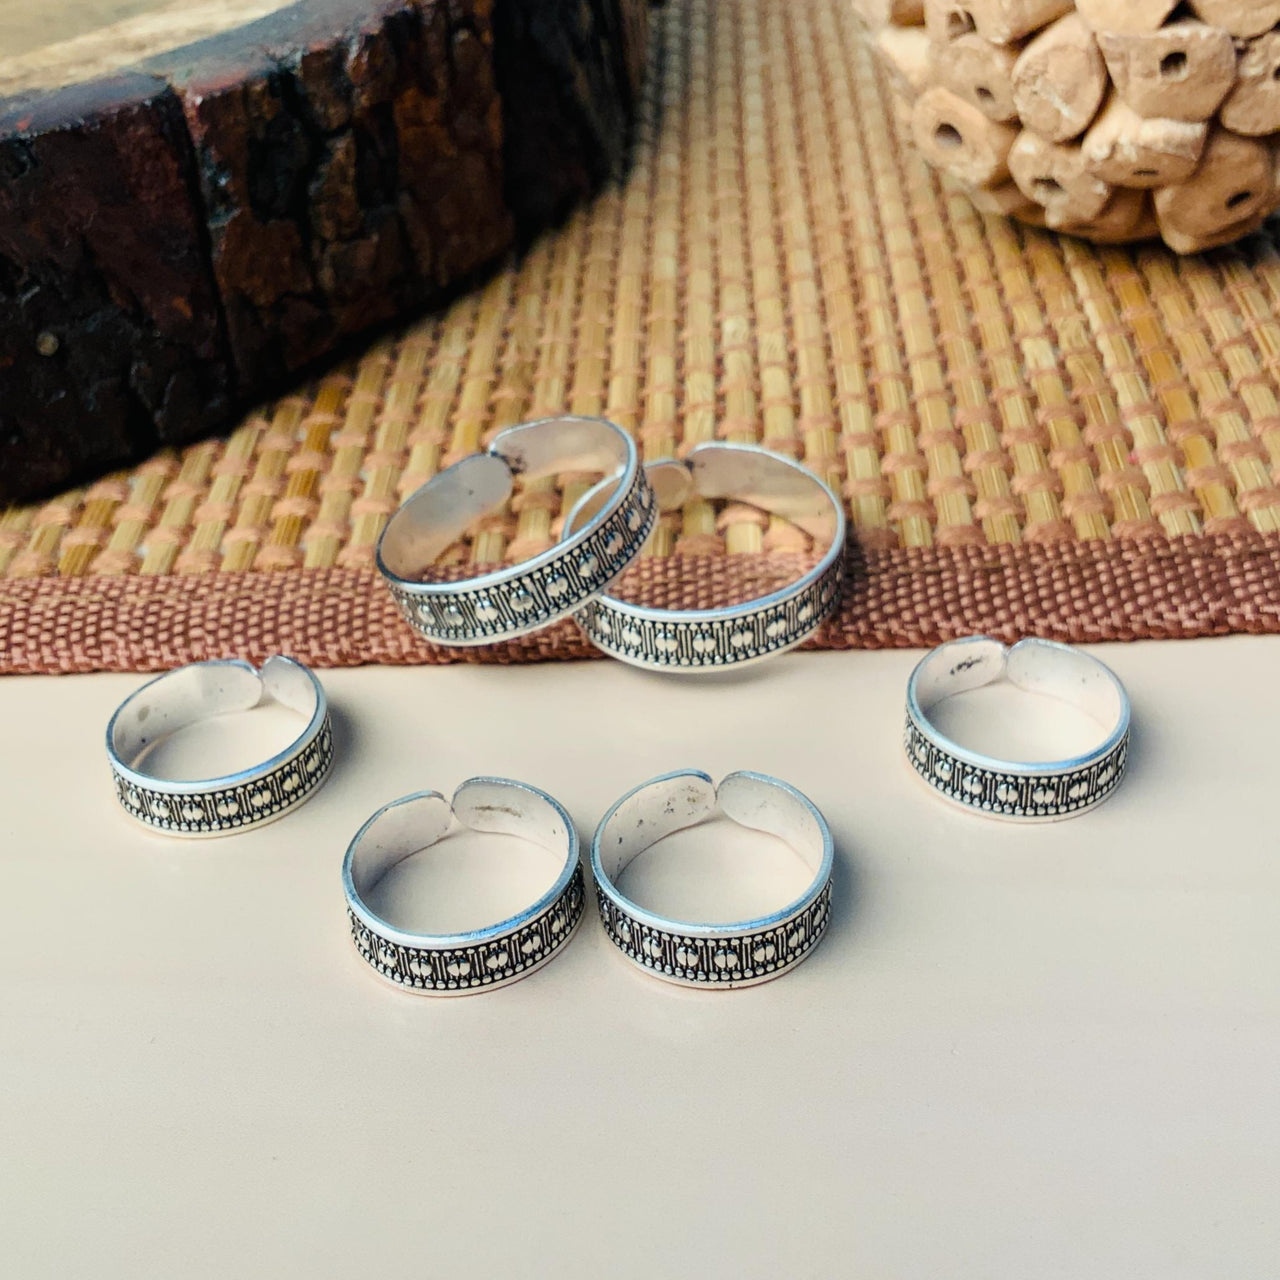 Silver Toe Rings Designs starting @ Rs. 510 -Shaya by CaratLane